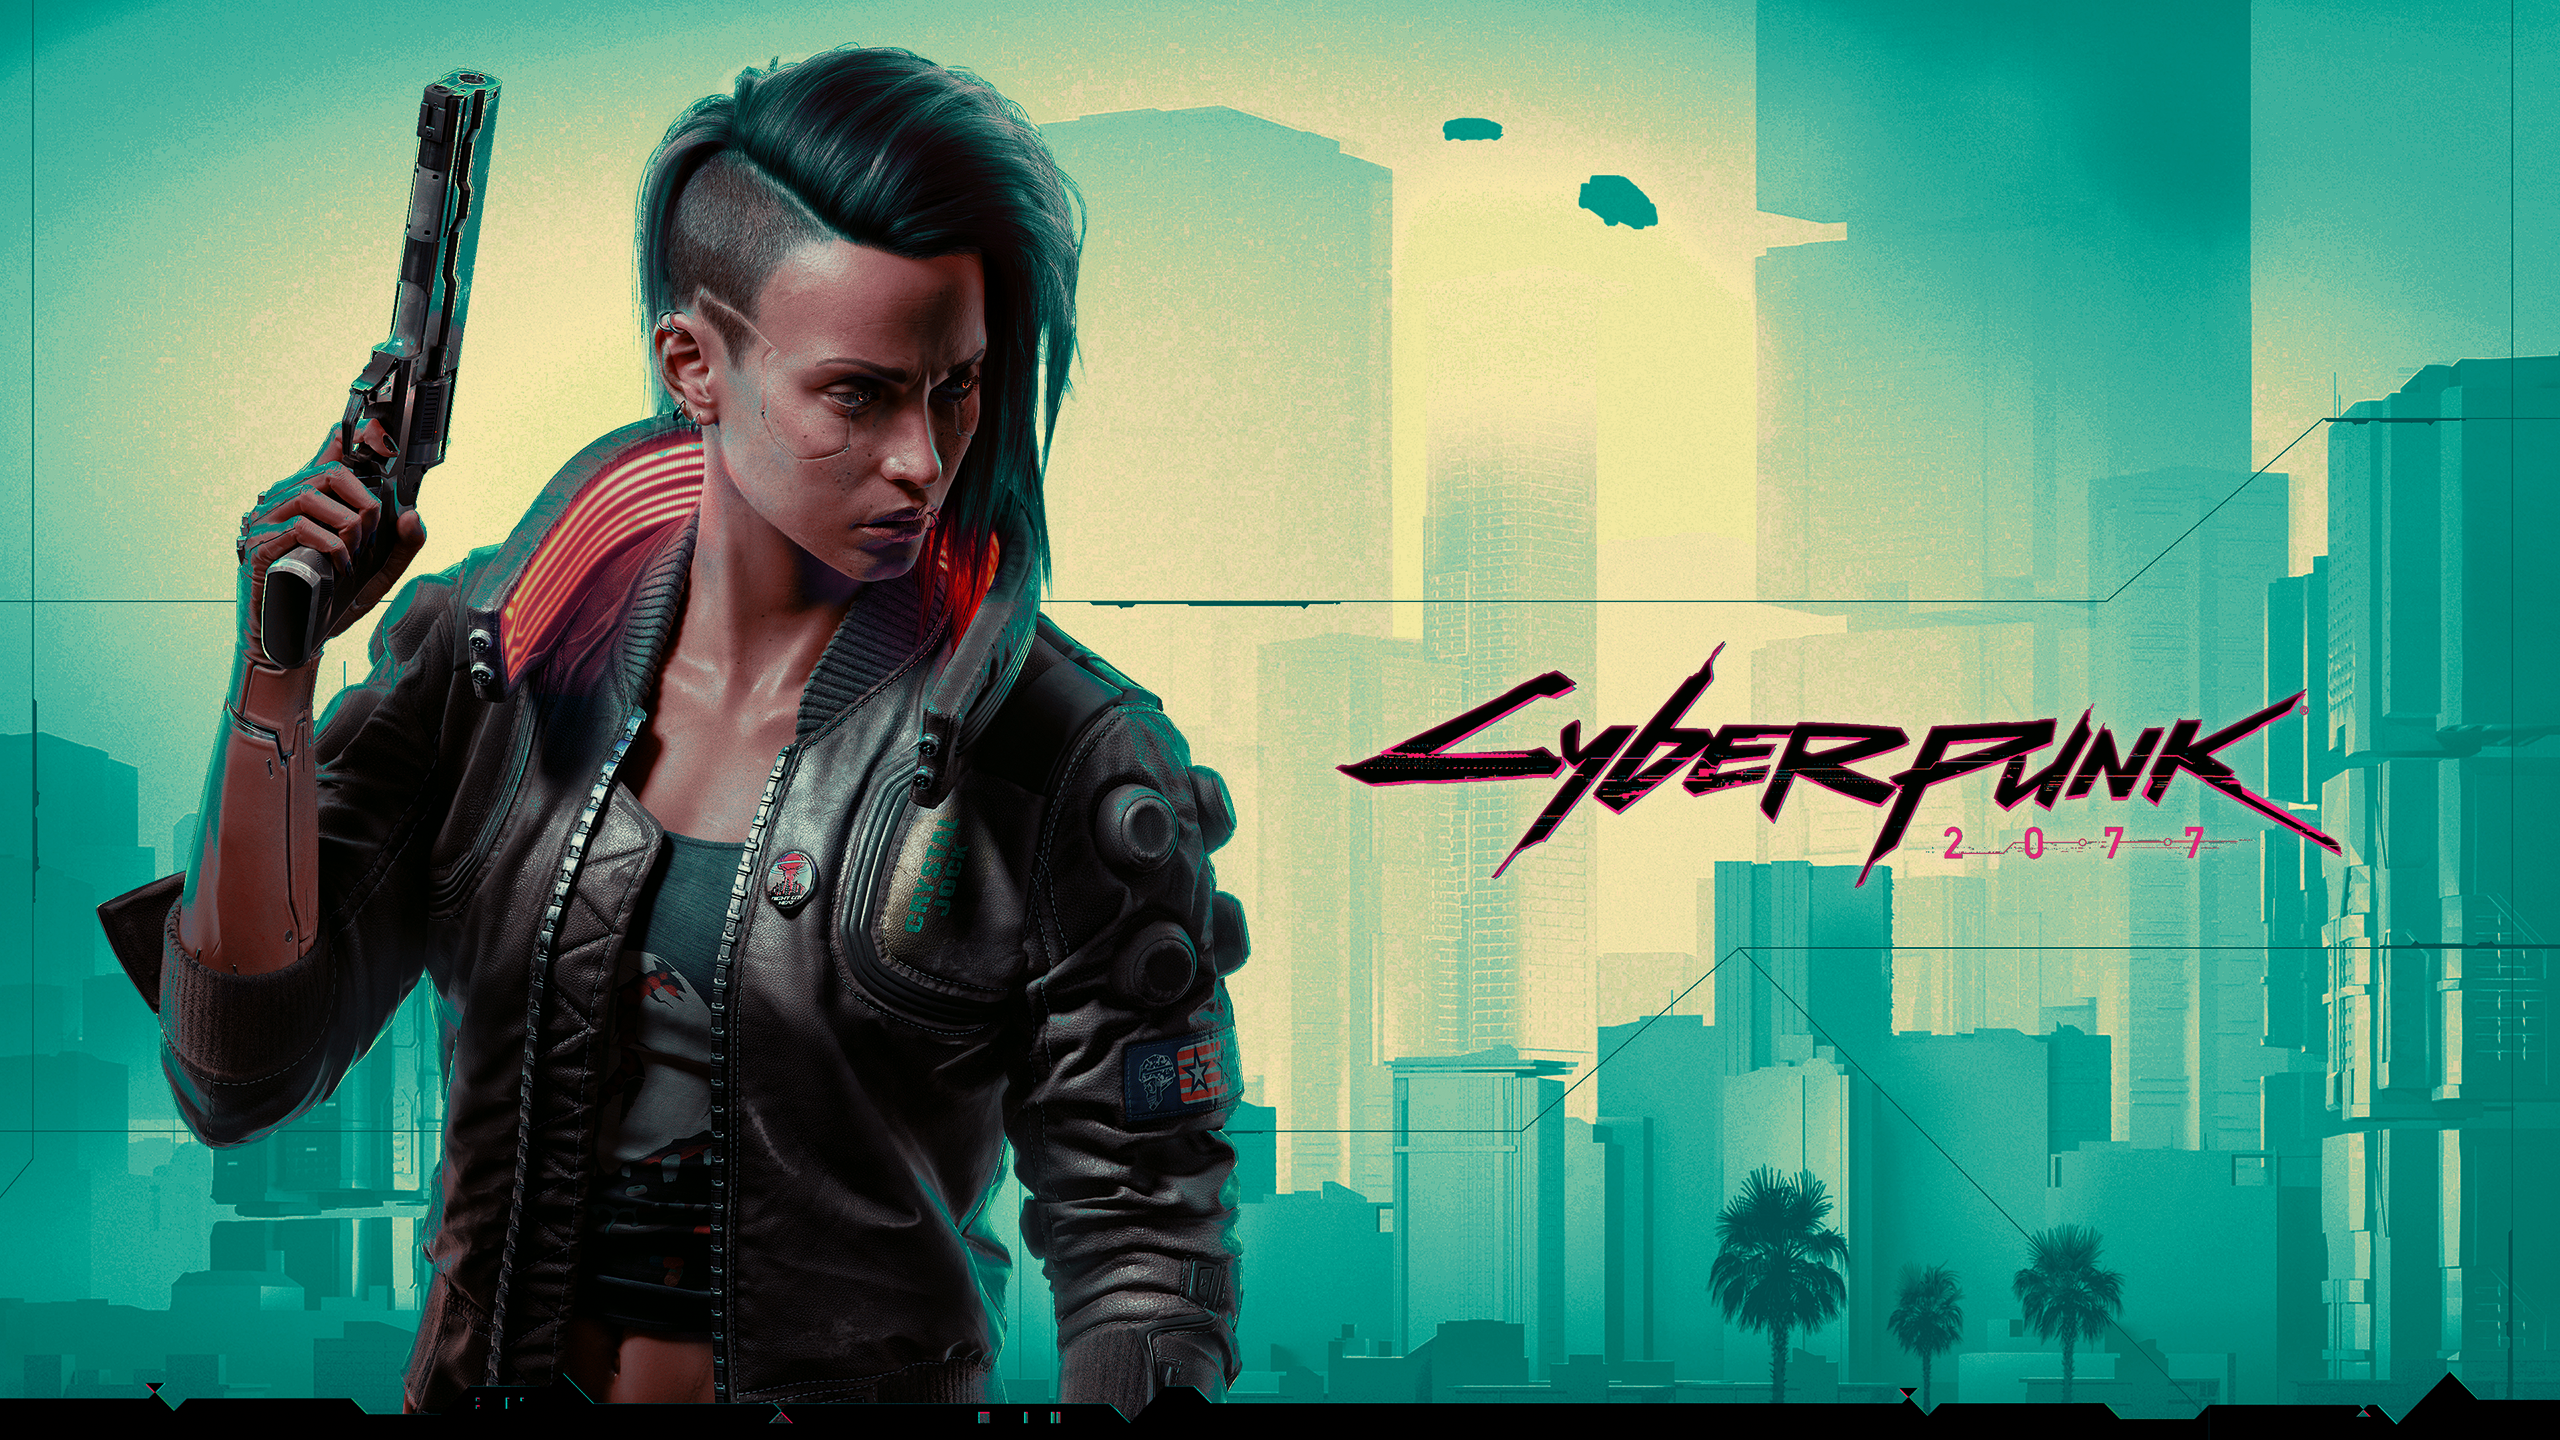 General 2560x1440 cyberpunk science fiction Cyberpunk 2077 video games dystopian video game girls turquoise CD Projekt RED